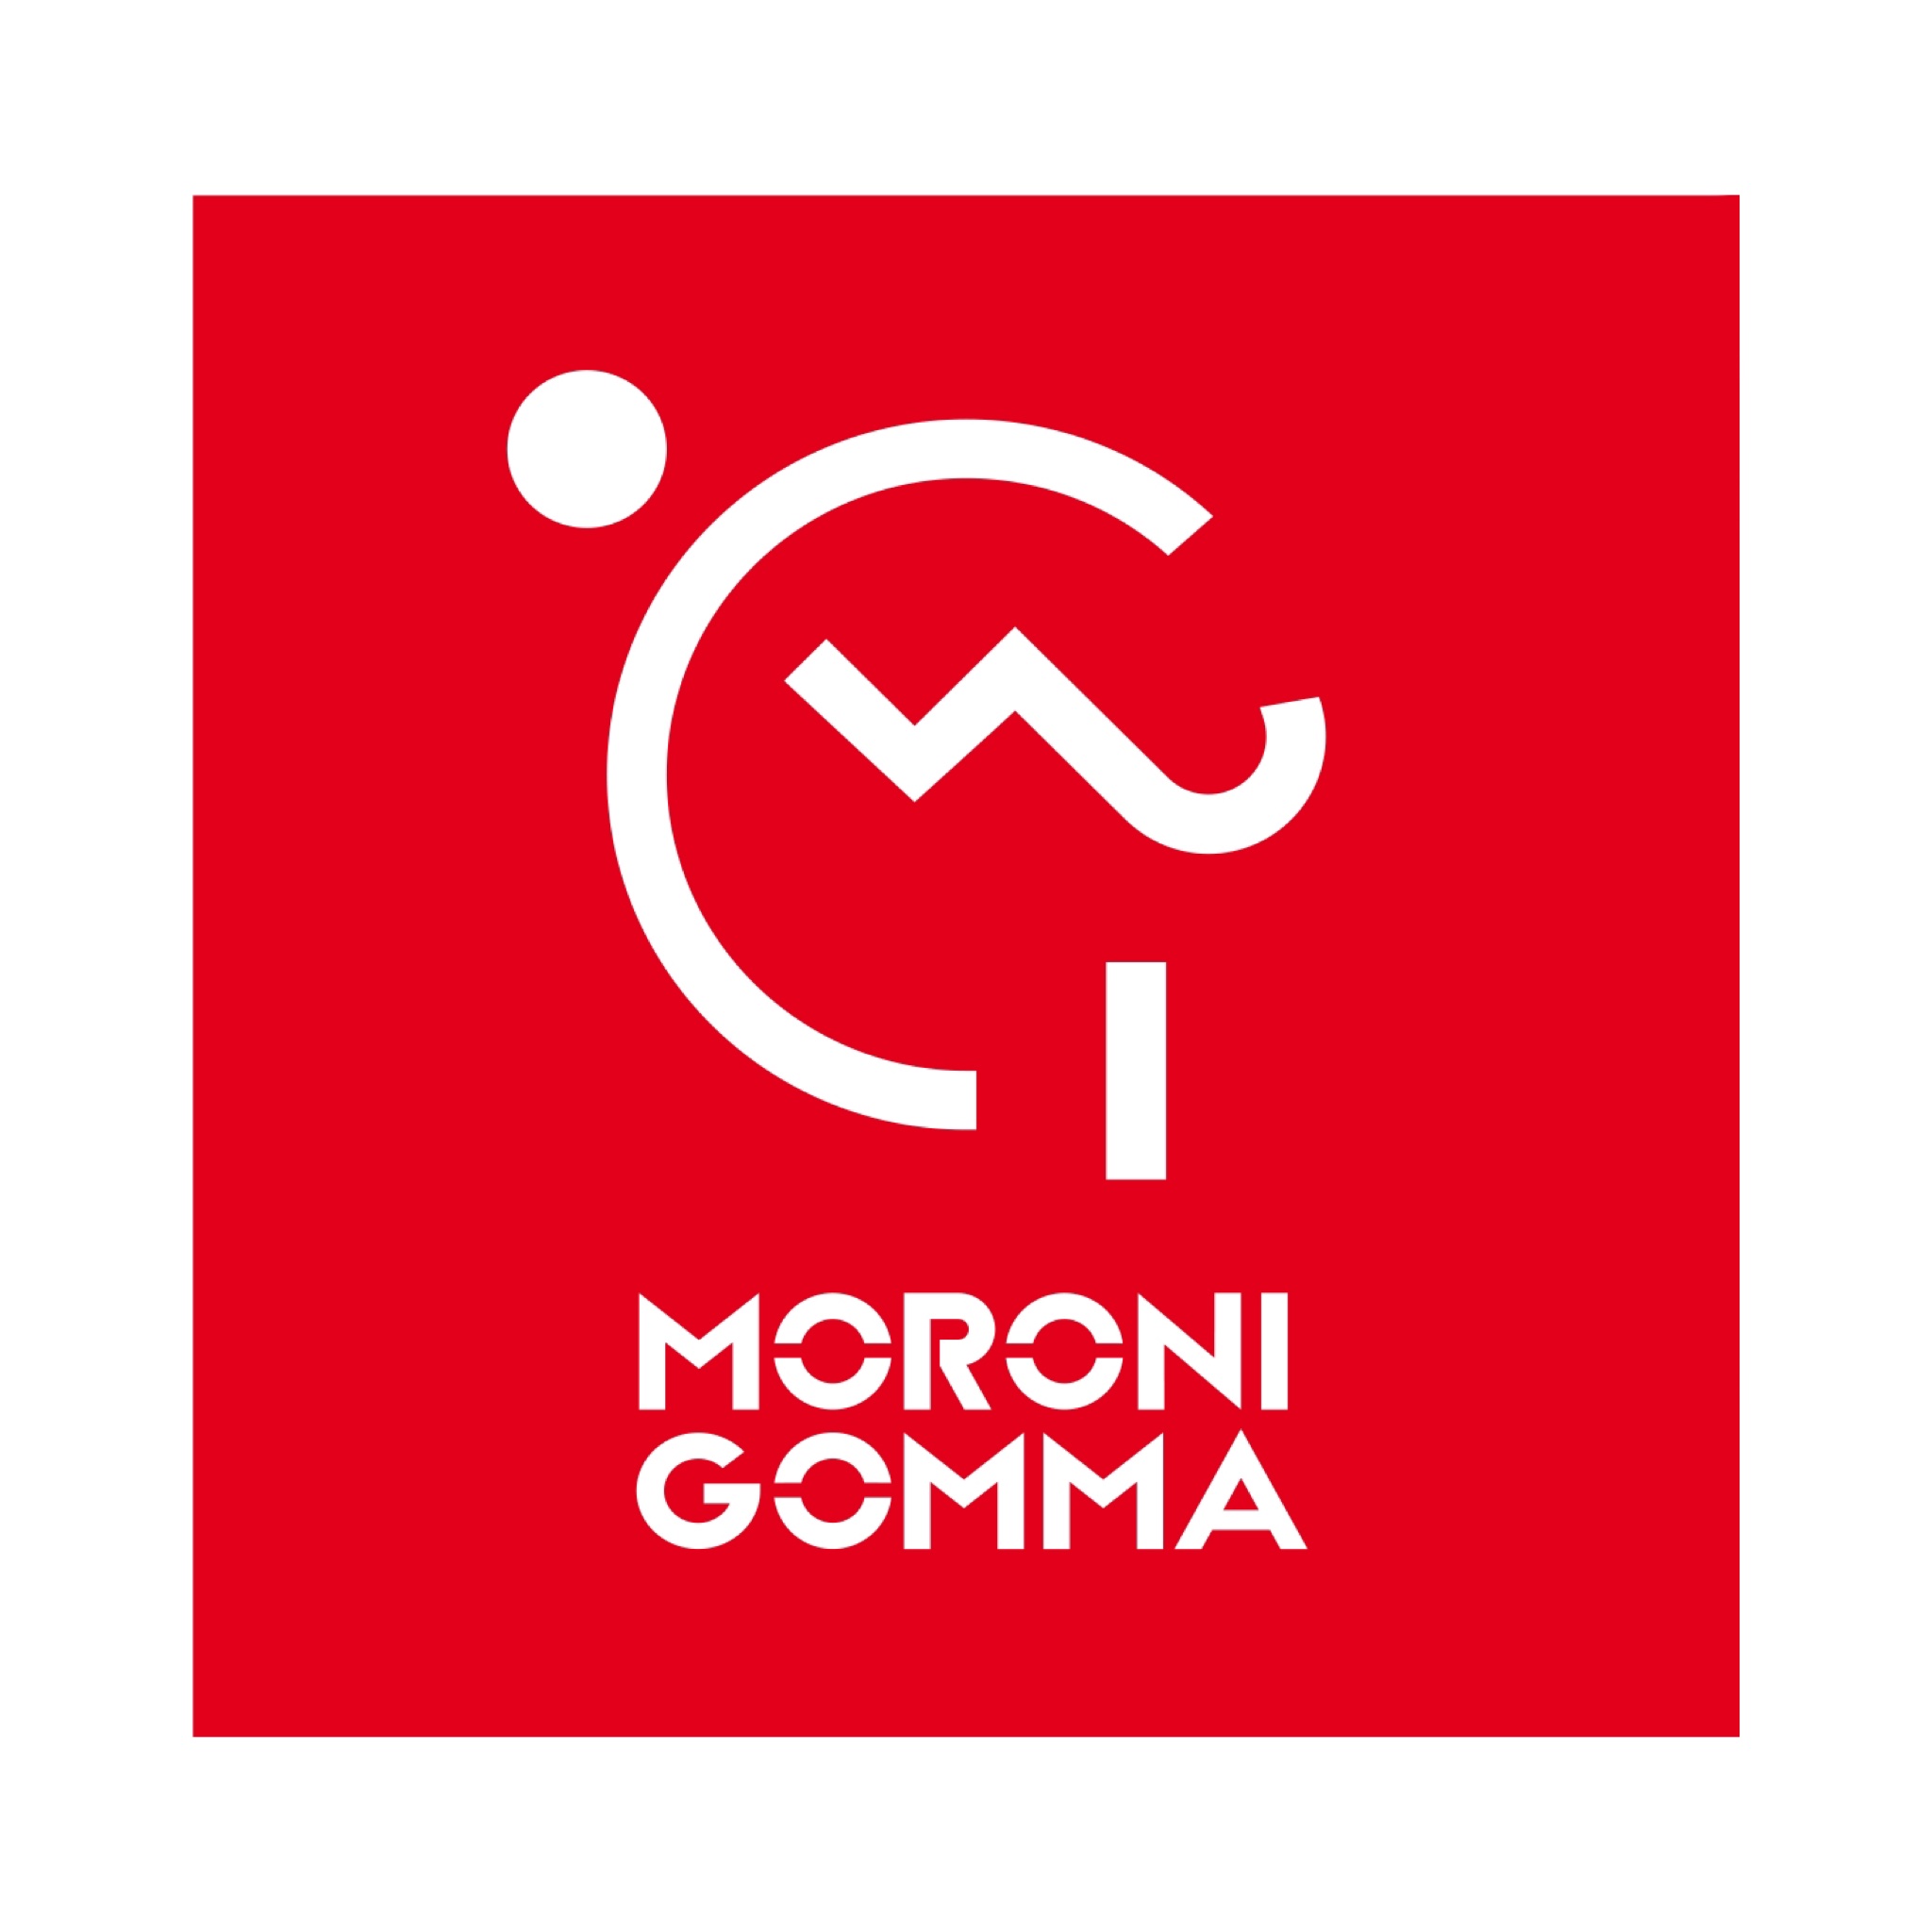 Moroni Gomma